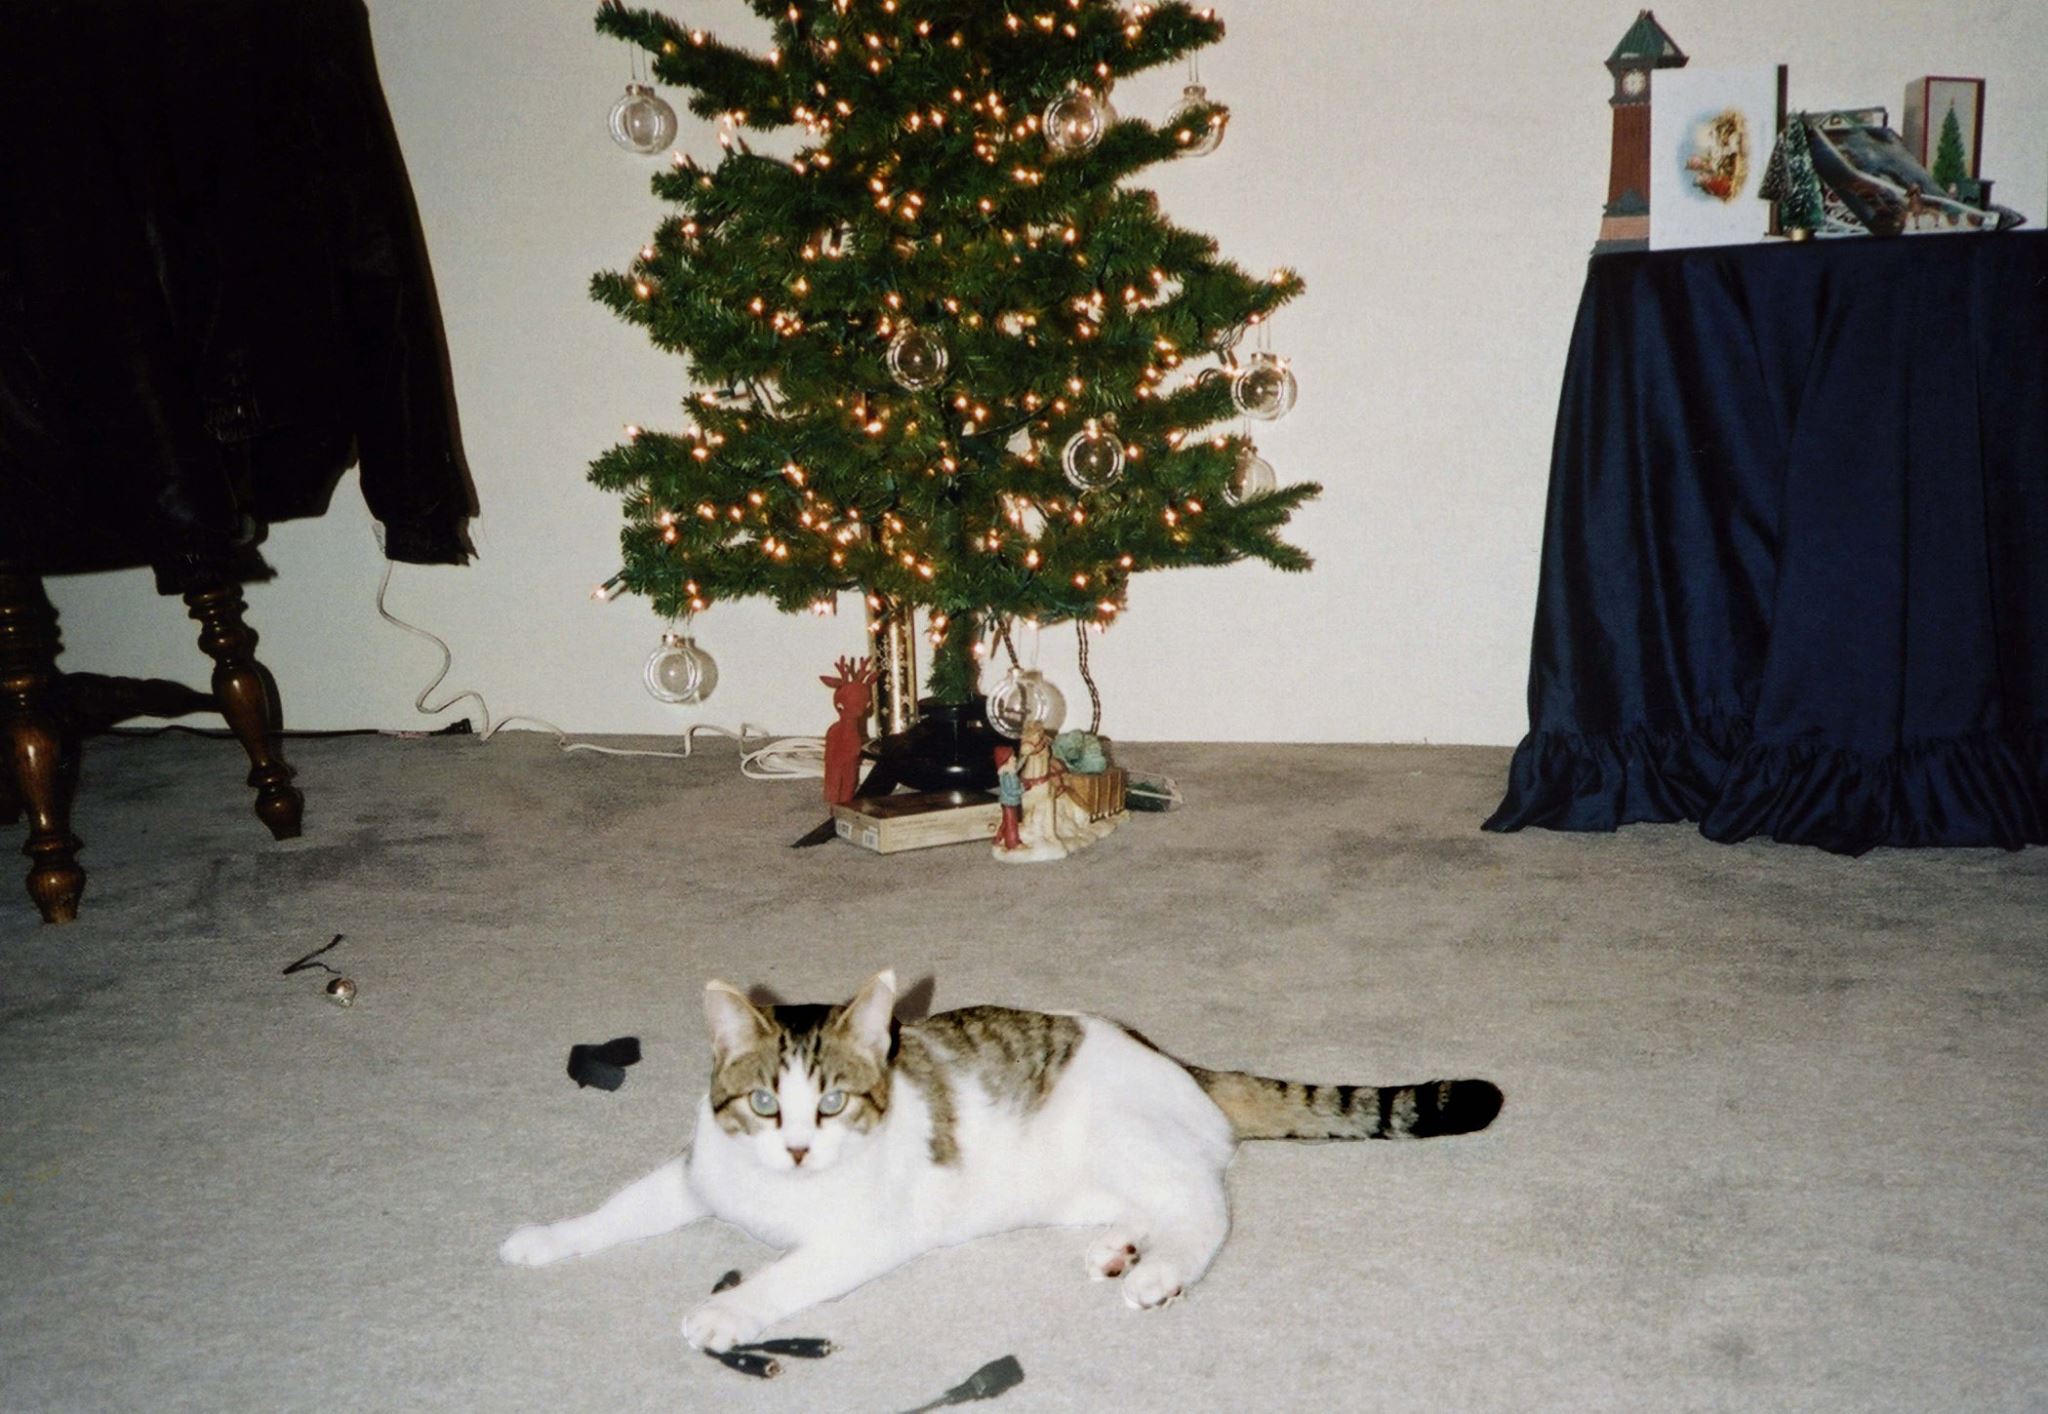 Macy-December 25, 2001